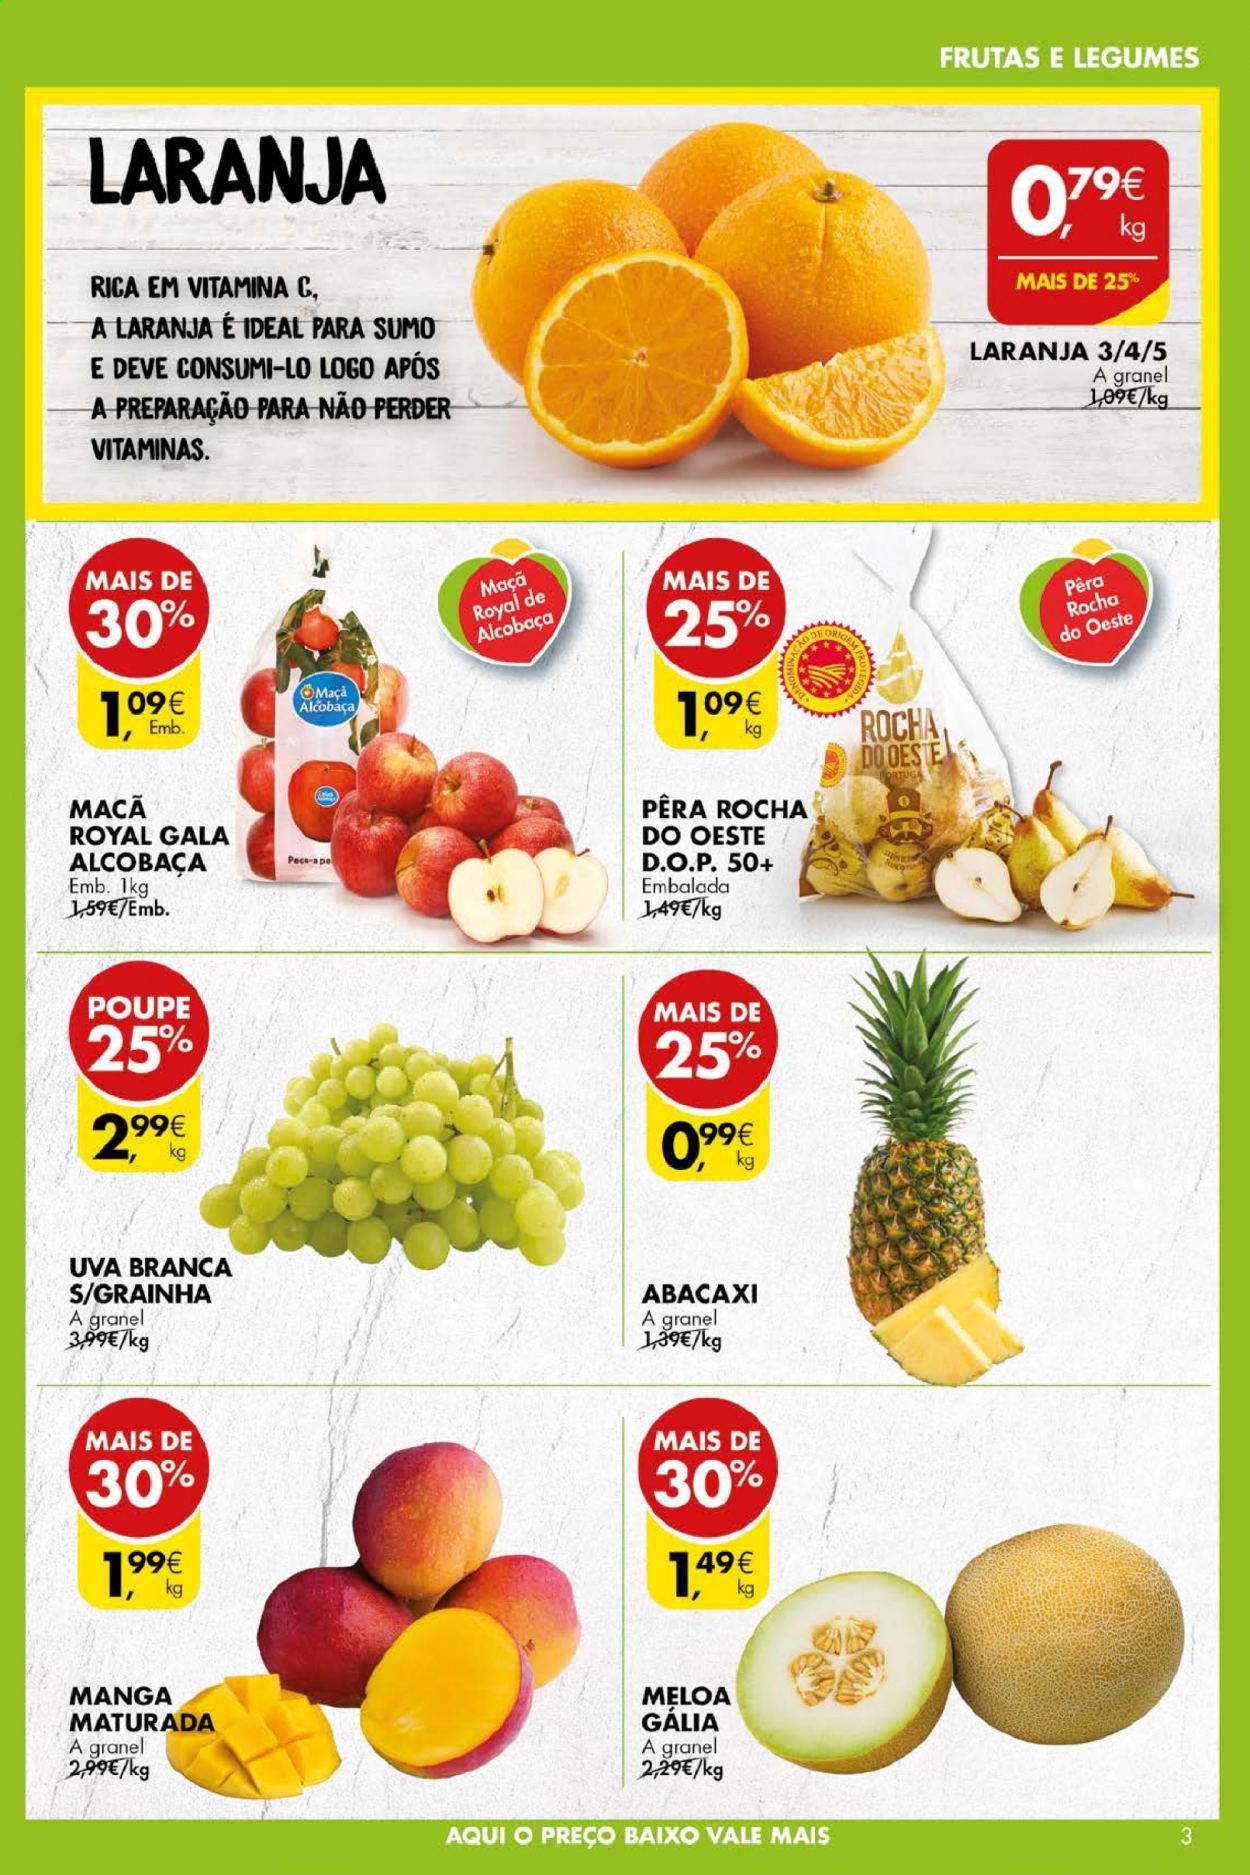 thumbnail - Folheto Pingo Doce - 20.4.2021 - 26.4.2021 - Produtos em promoção - maçã, laranja, uva, legumes, Vitamina C. Página 3.